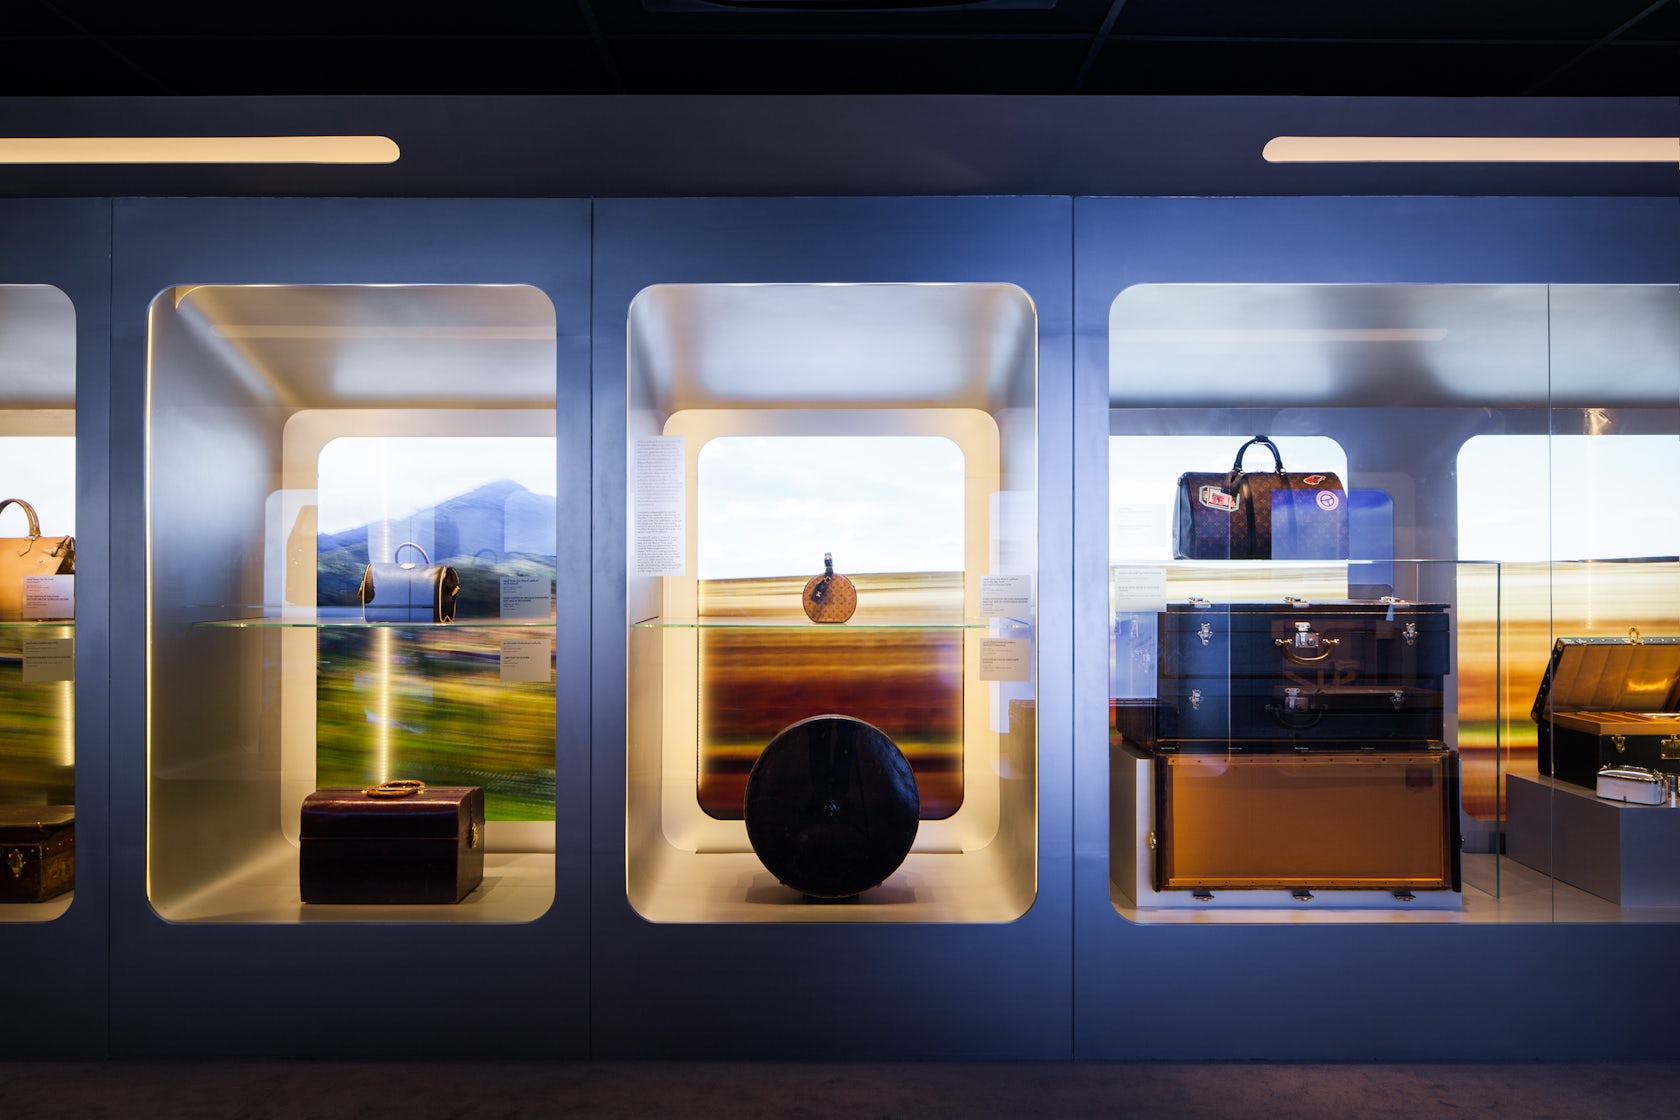 Louis Vuitton Presents Time Capsule Exhibition In Berlin